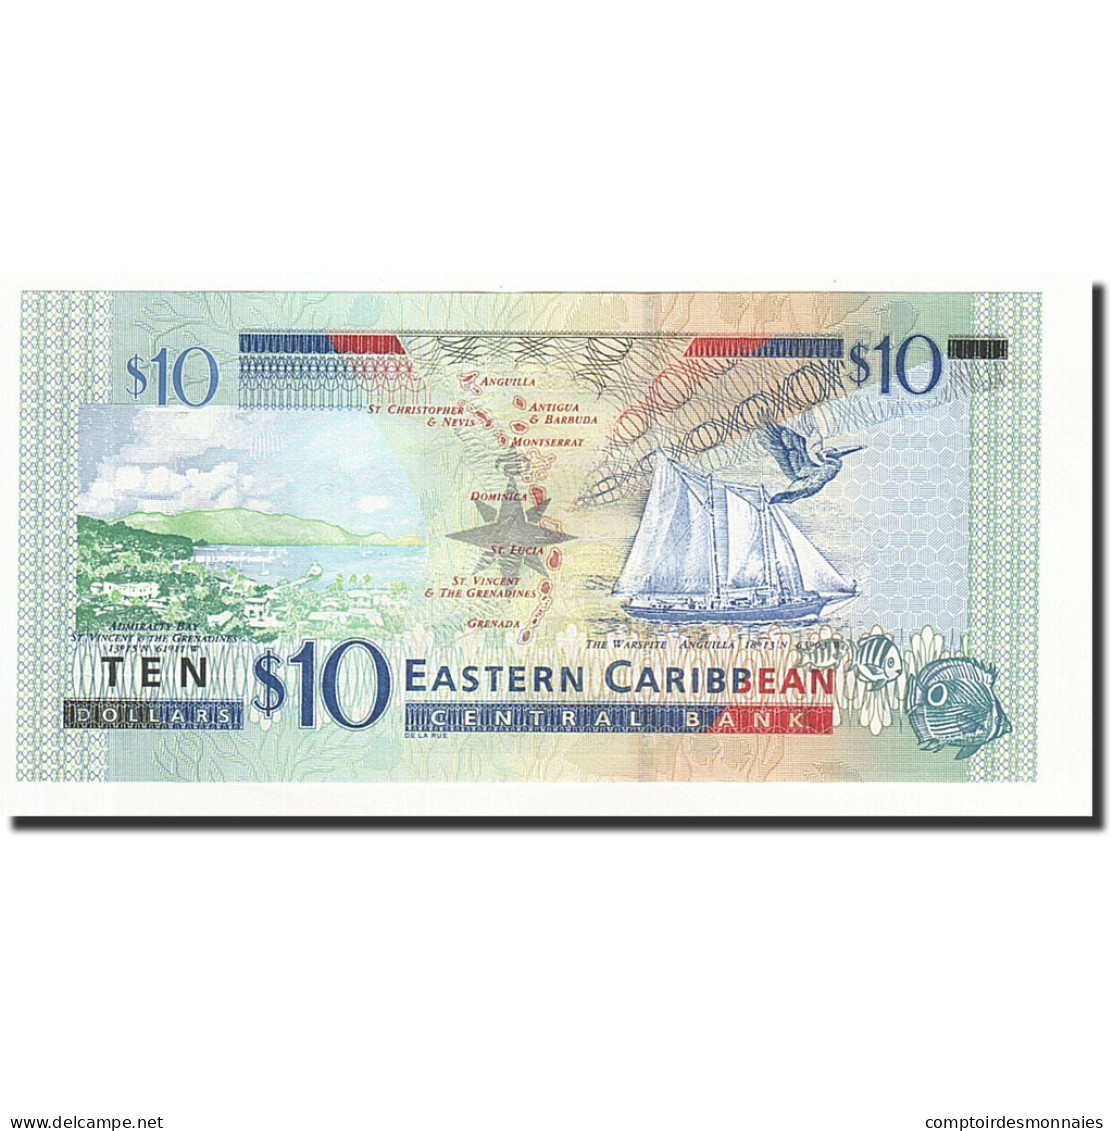 Billet, Etats Des Caraibes Orientales, 10 Dollars, Undated (2003), KM:43a, SPL+ - Caraïbes Orientales